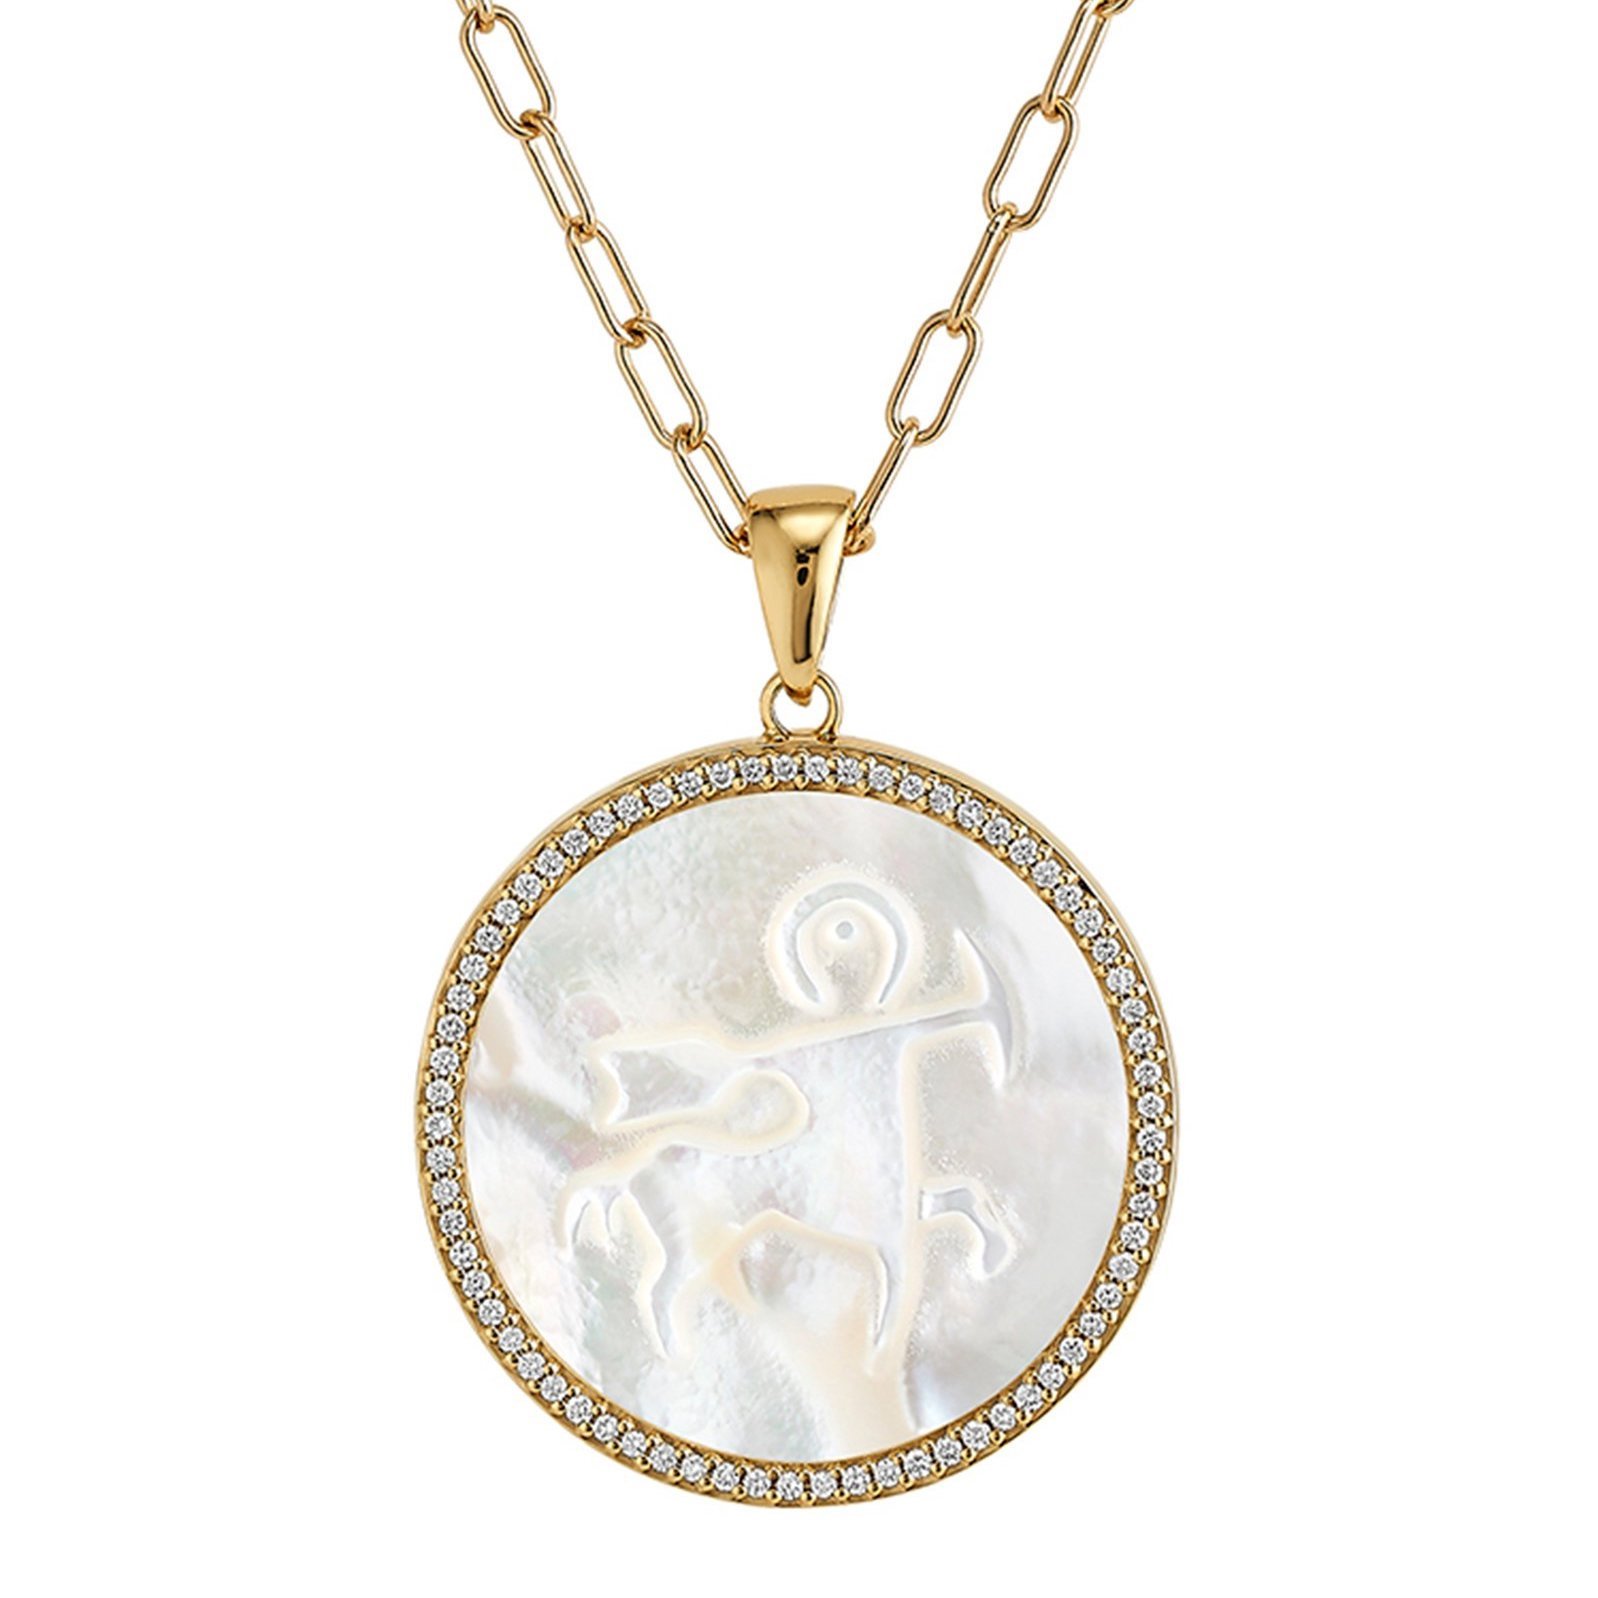 Ashley McCormick Sagittarius 18k Yellow Gold Mother of Pearl Diamond Necklace, $3,545 at Moda Operandi